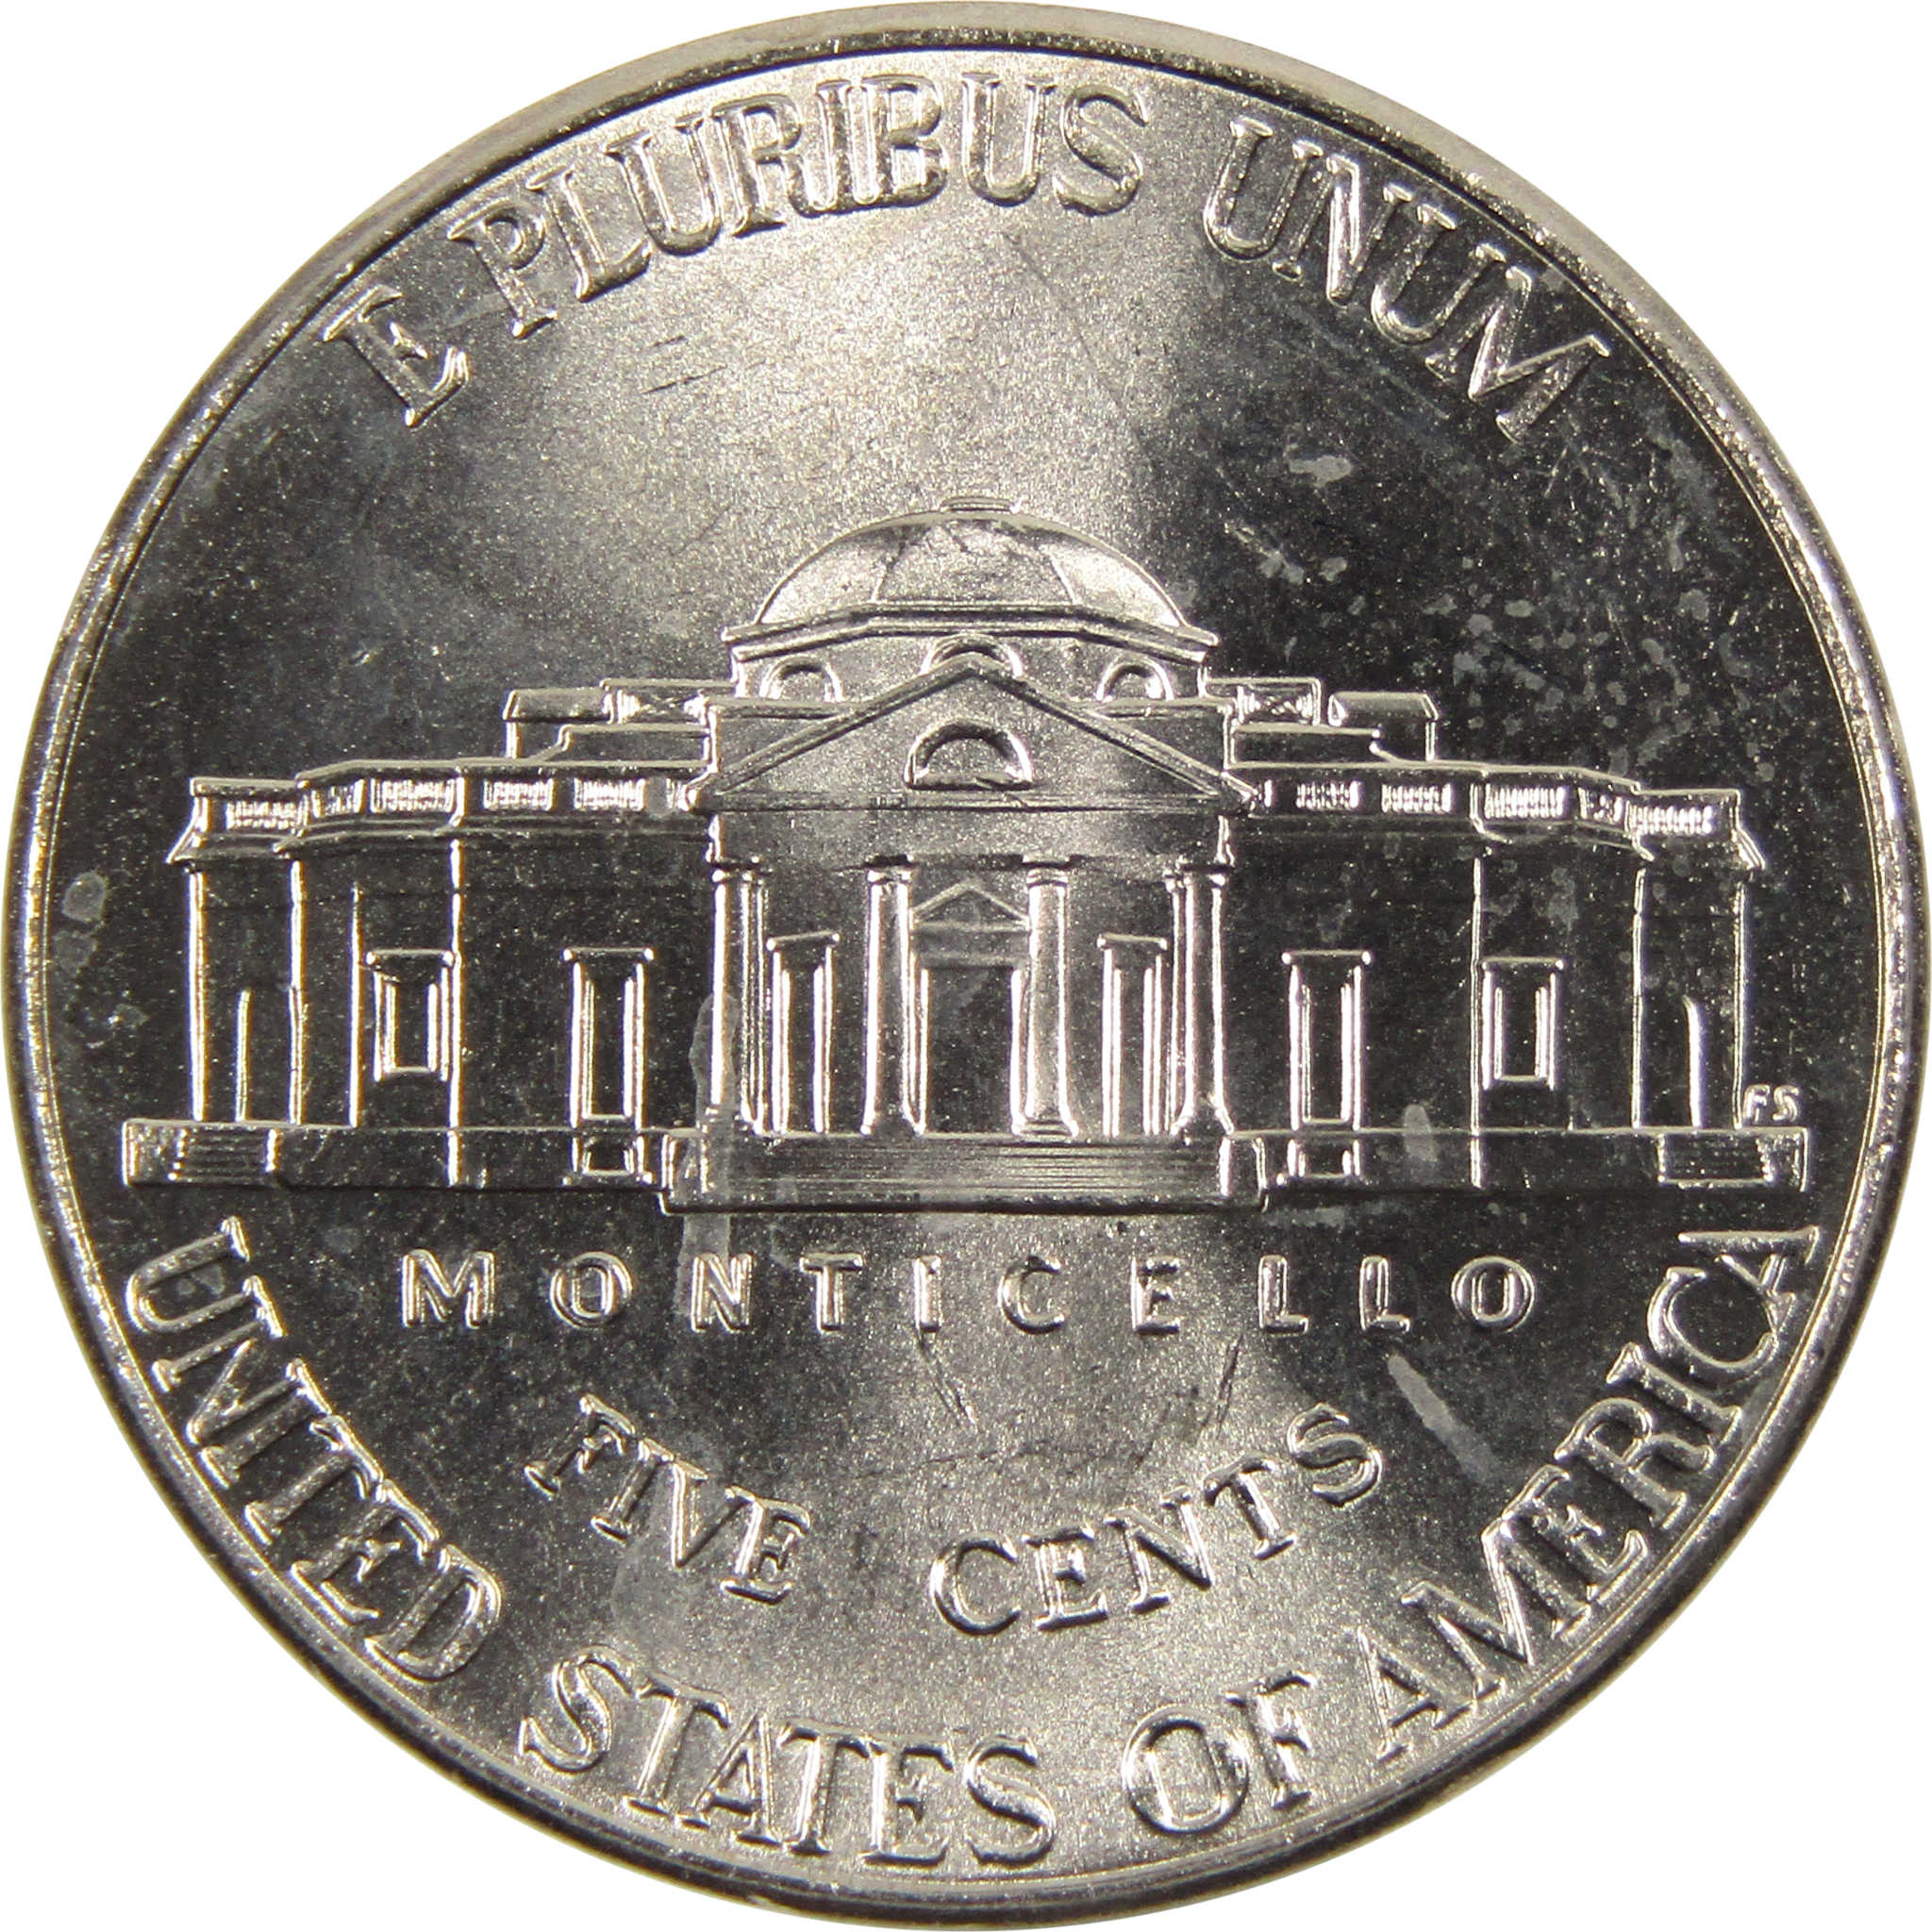 2016 P Jefferson Nickel BU Uncirculated 5c Coin